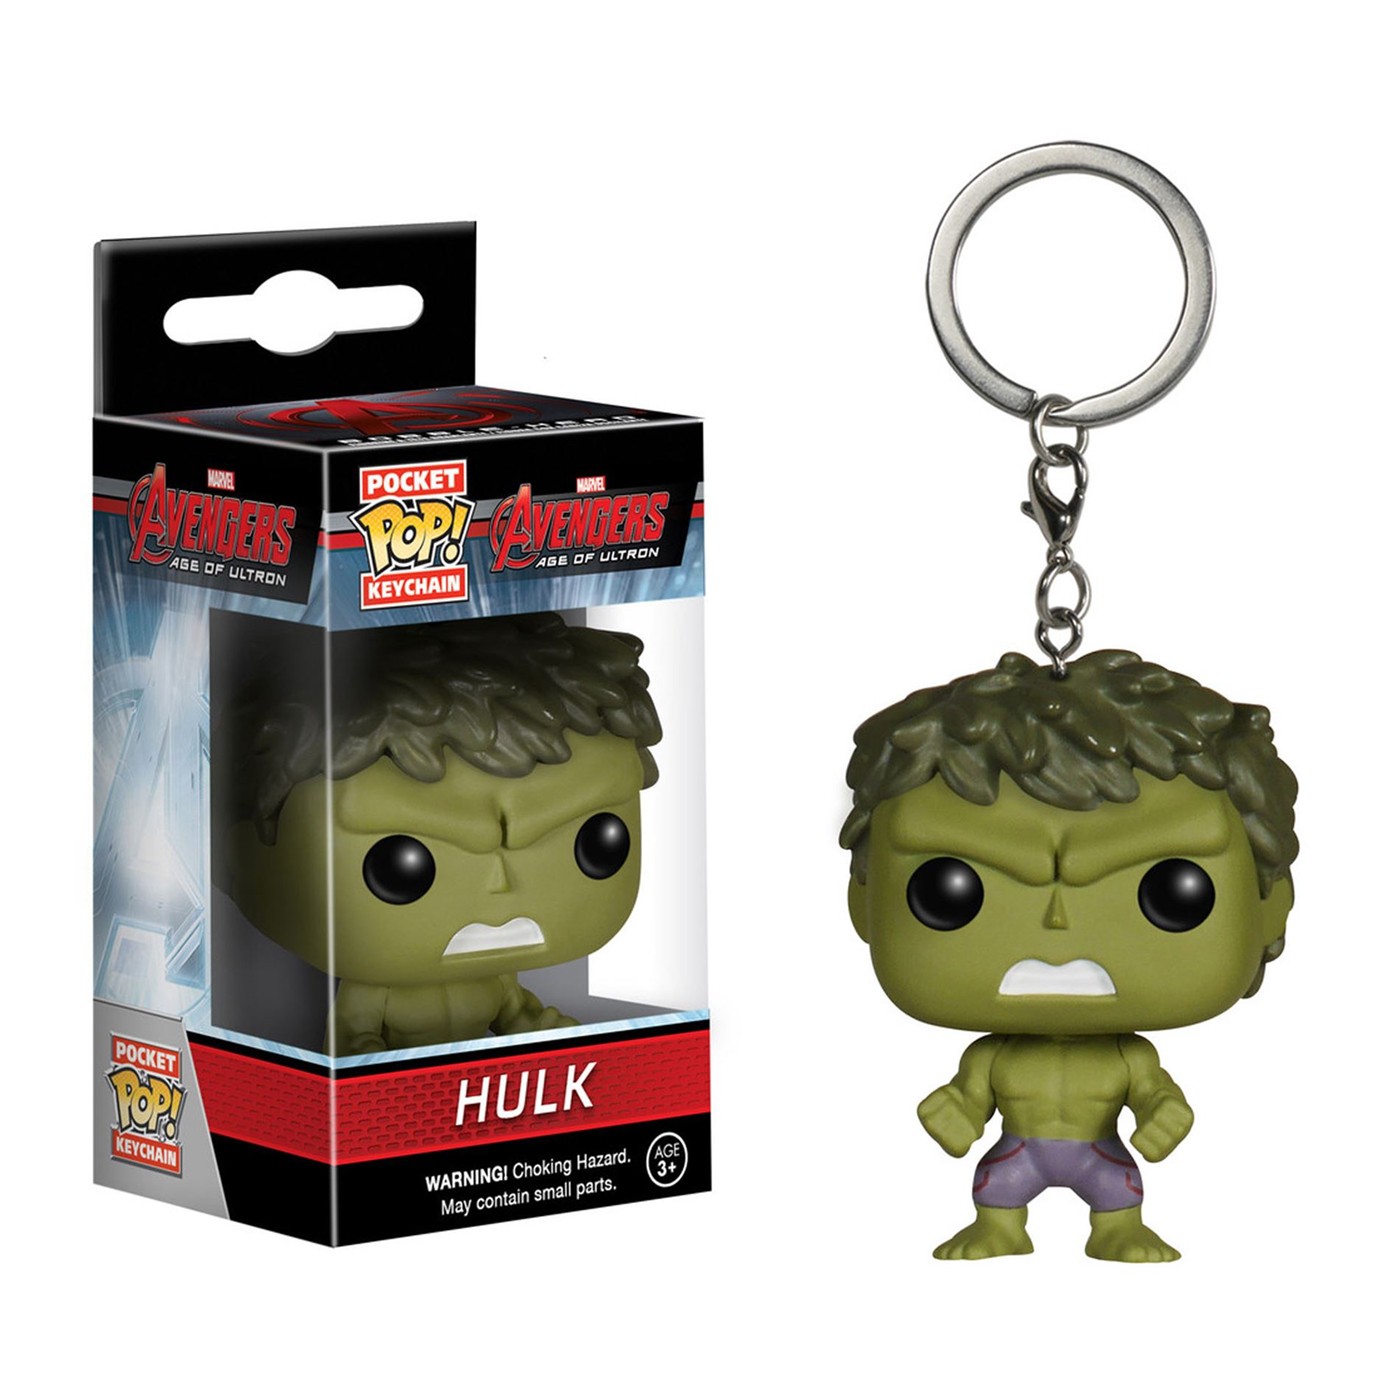 Hulk Age of Ultron Pocket Pop Keychain